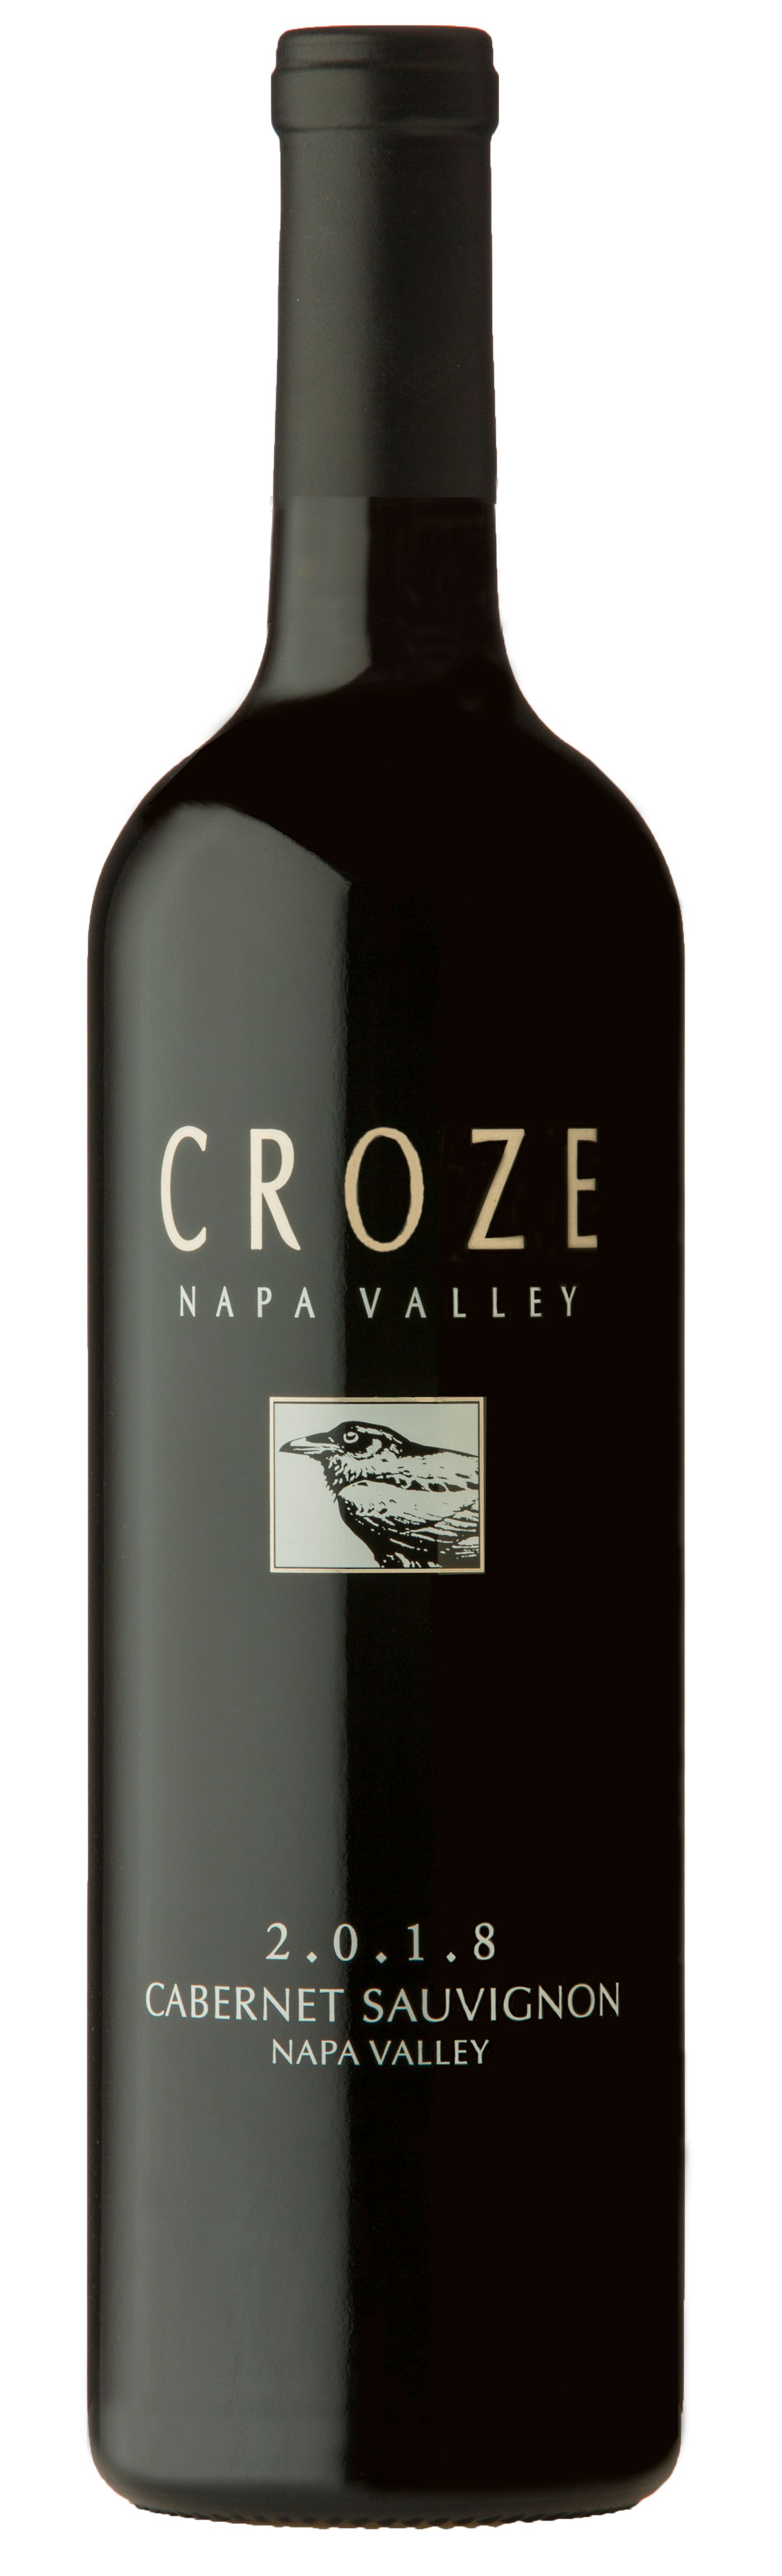 Product Image for 2018 Croze Cabernet Sauvignon Napa Valley